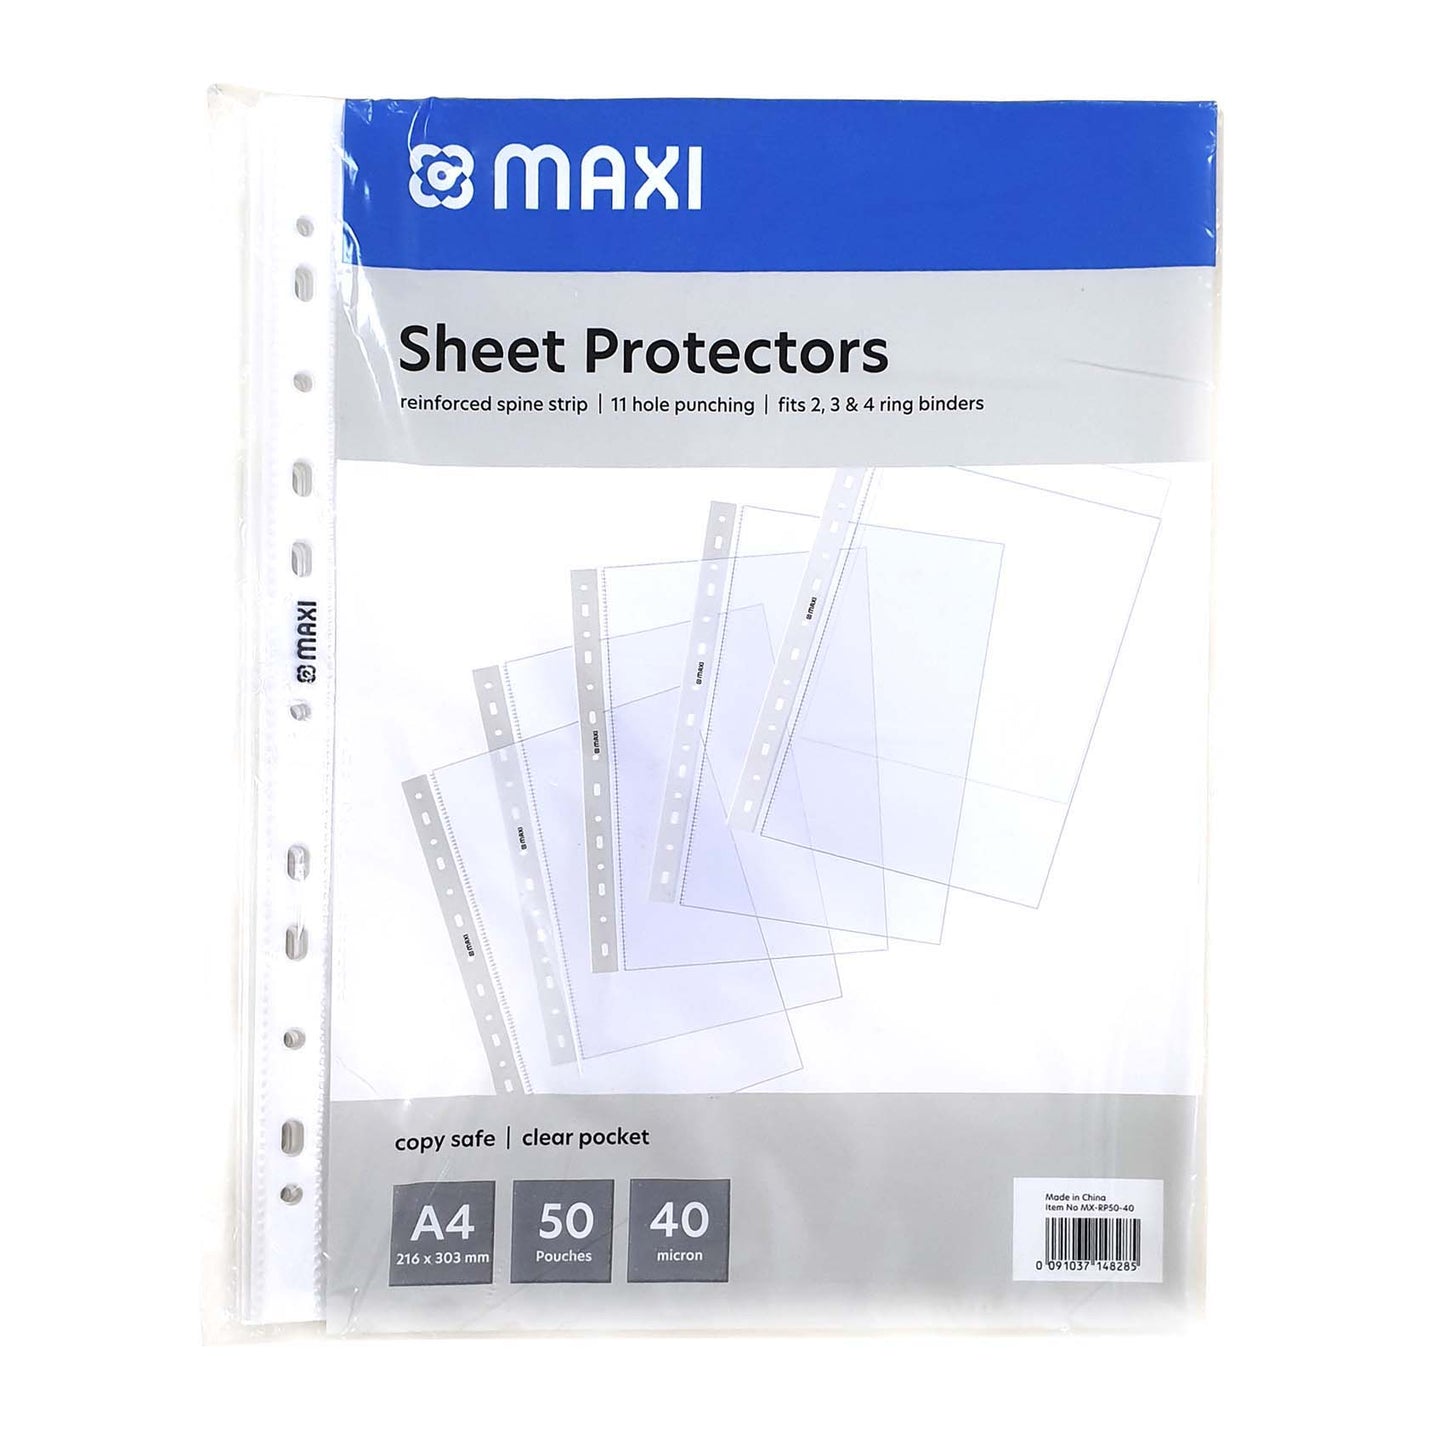 stationery uae sheet protector